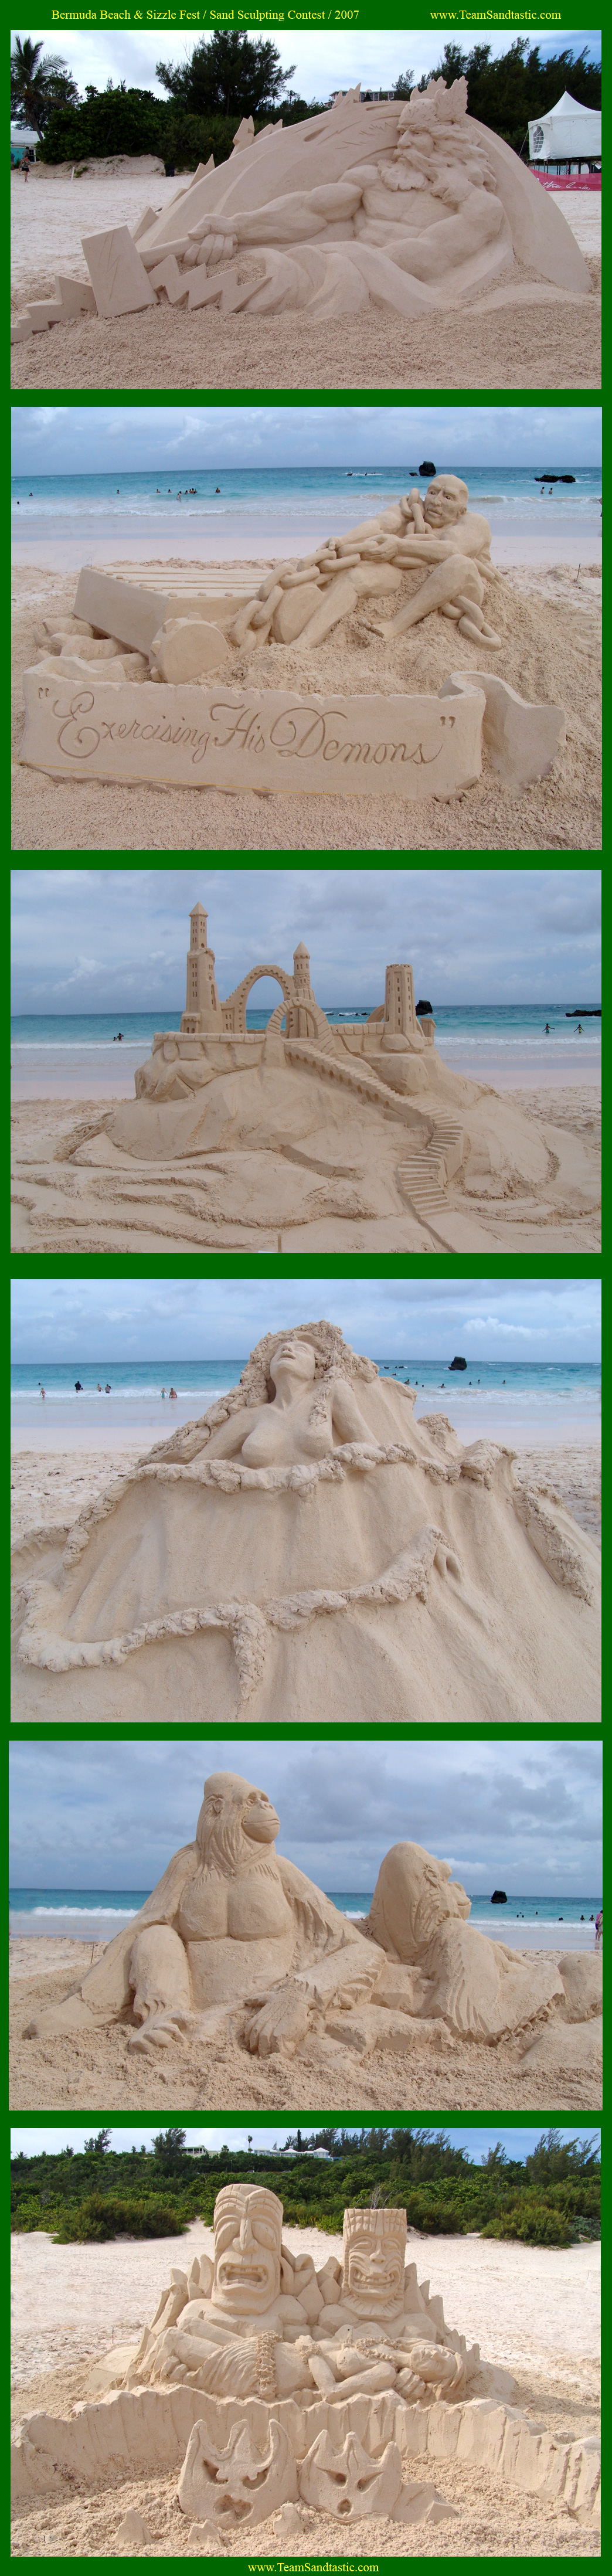 Sandtastic Days Sand Sculpting Contest